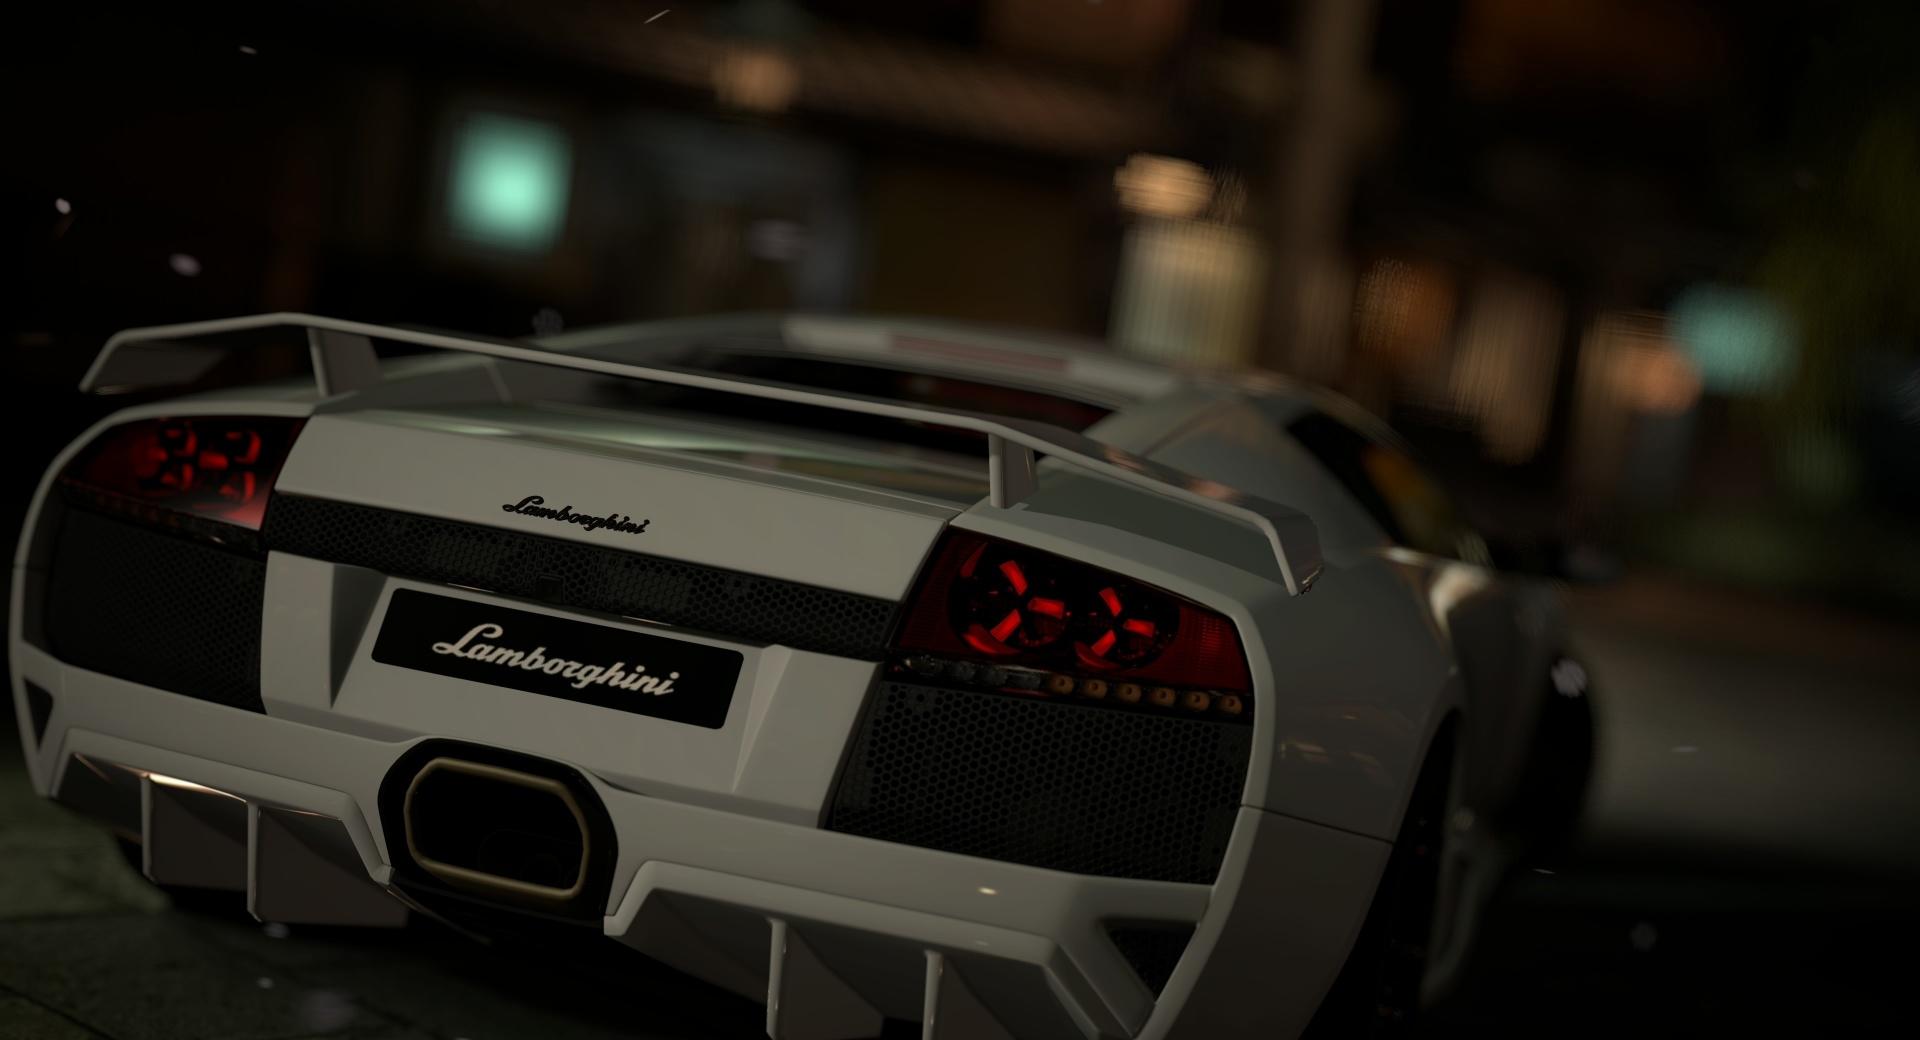 Lamborghini Murcilago Rear at 320 x 480 iPhone size wallpapers HD quality